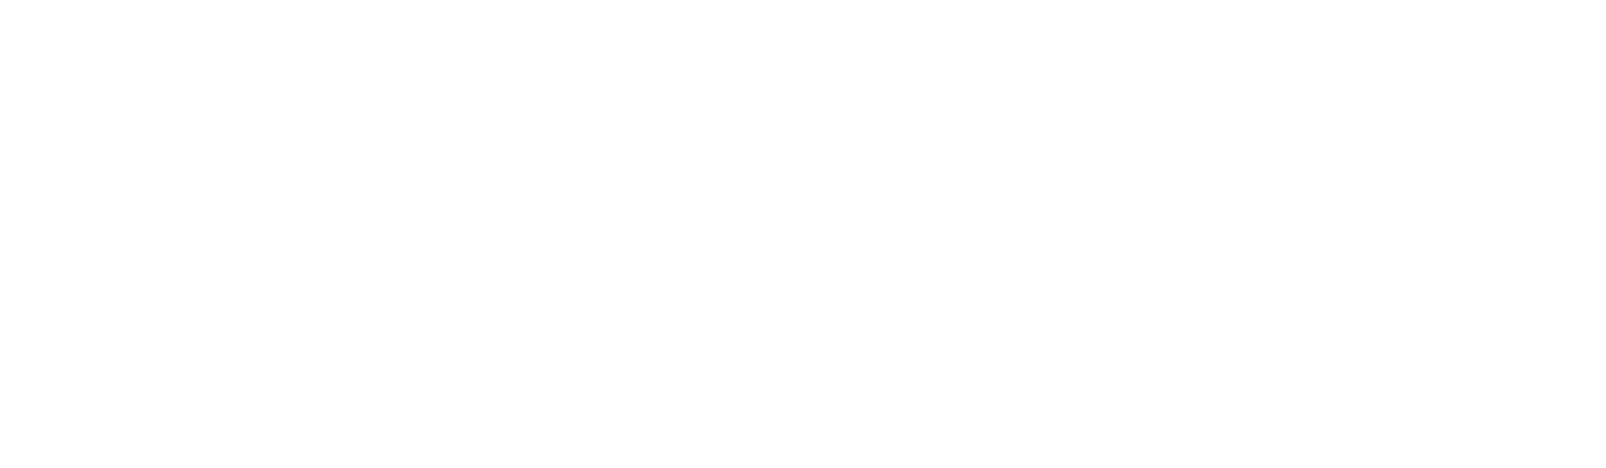 Hines logo